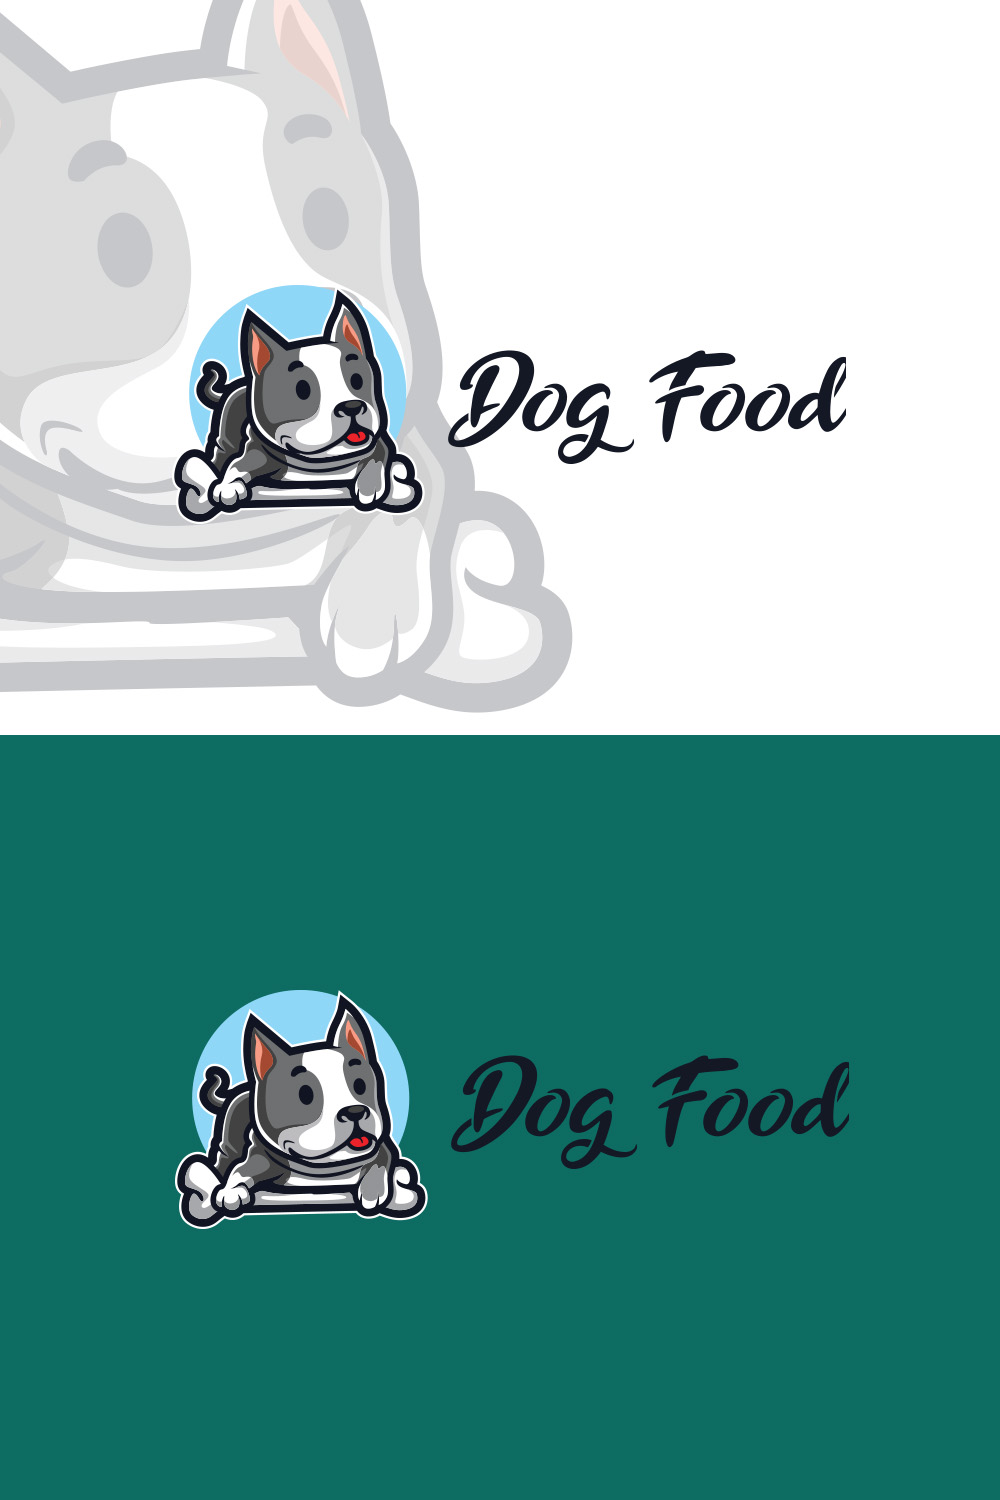 Dog Food - Cartoon Dog mascot logo pinterest preview image.